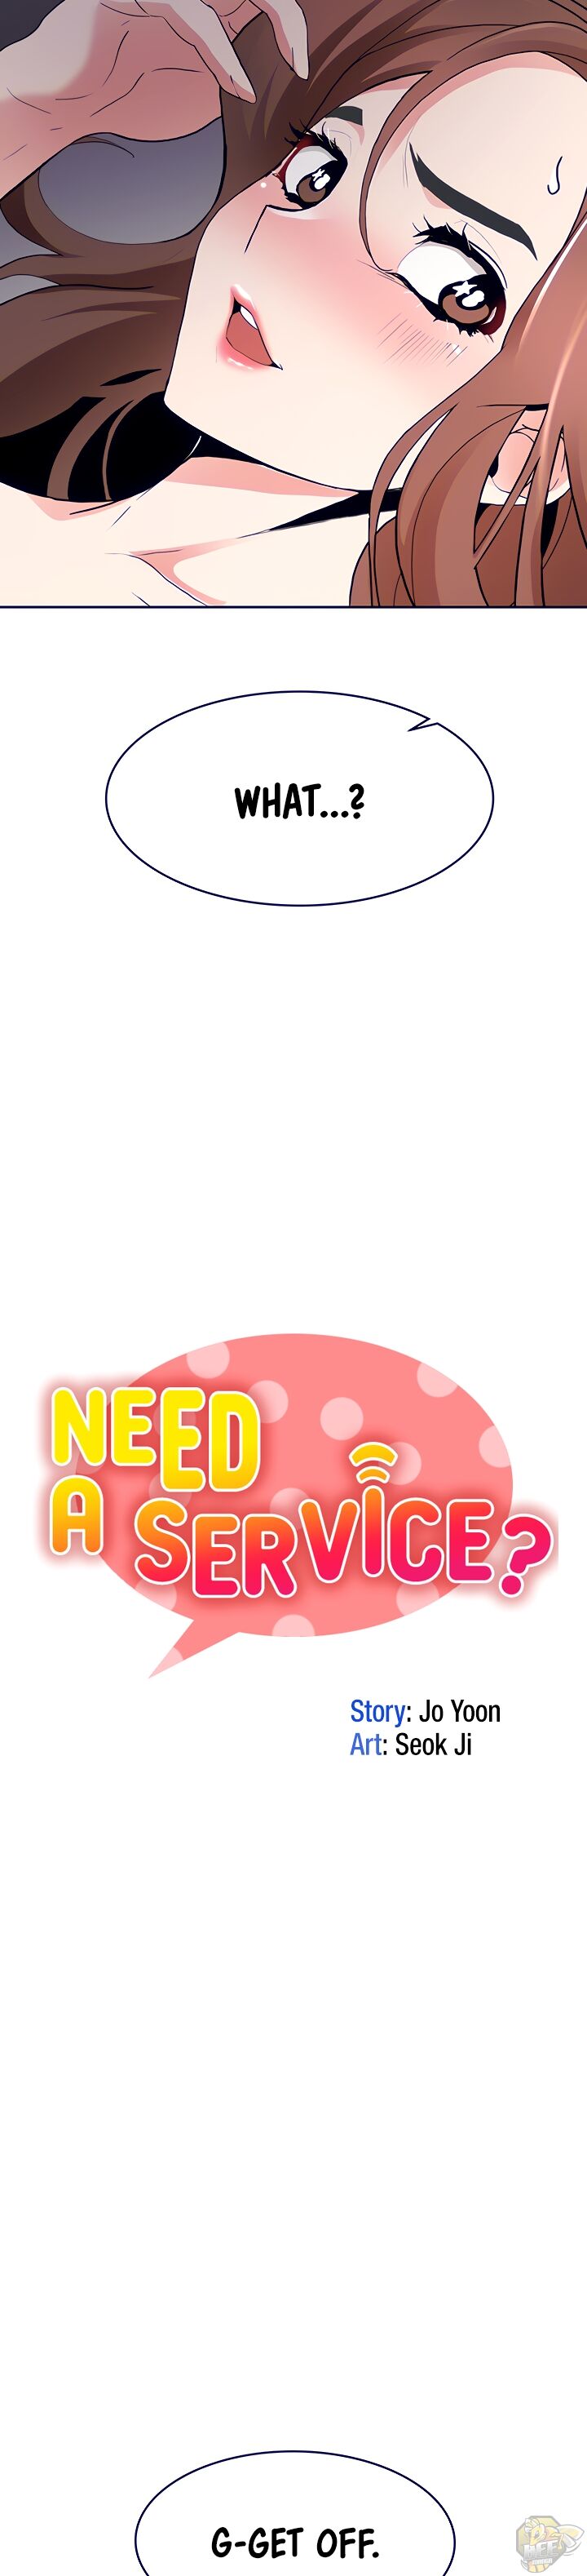 Need A Service? Chapter 8 - MyToon.net